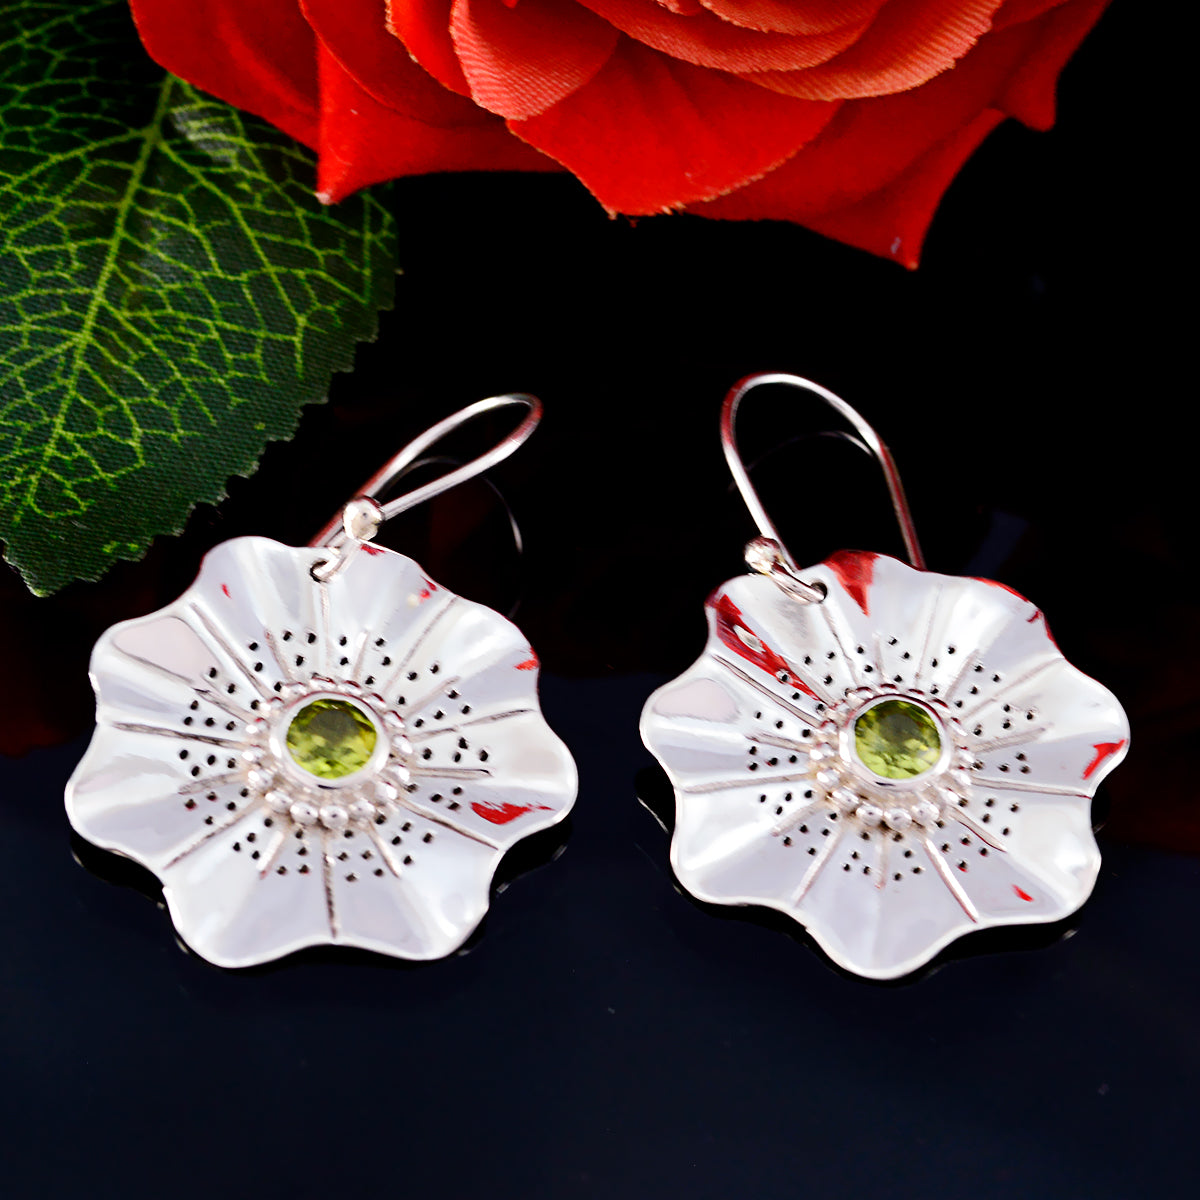 Riyo Good Gemstones round Faceted Green Peridot Silver Earrings gift for christmas